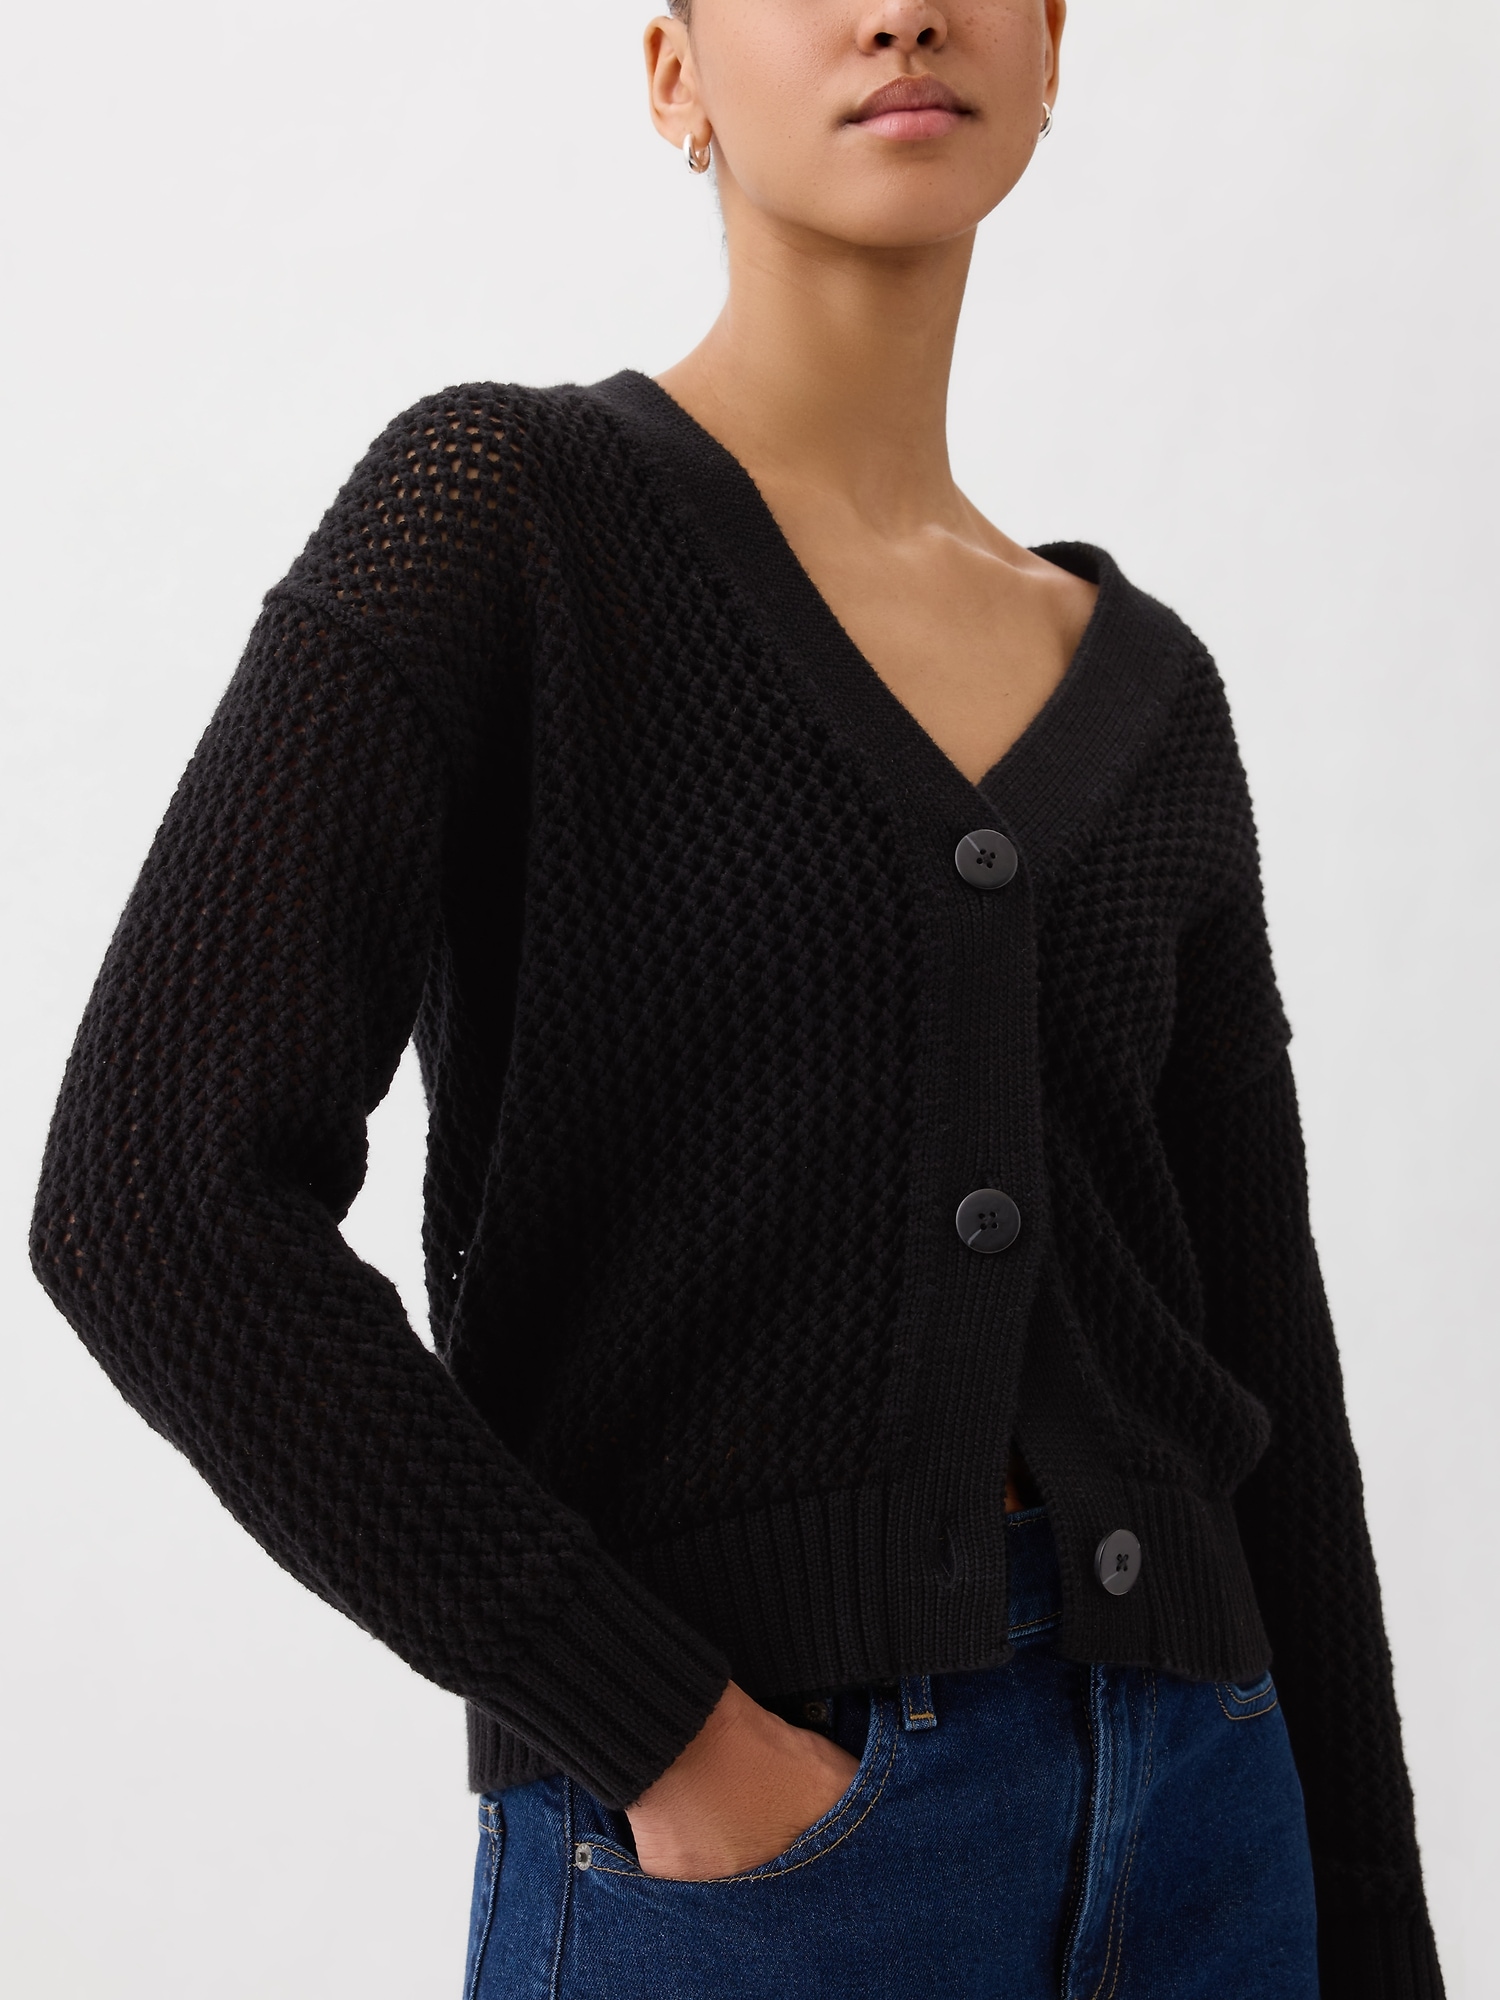 Crochet Cardigan Sweater | Gap